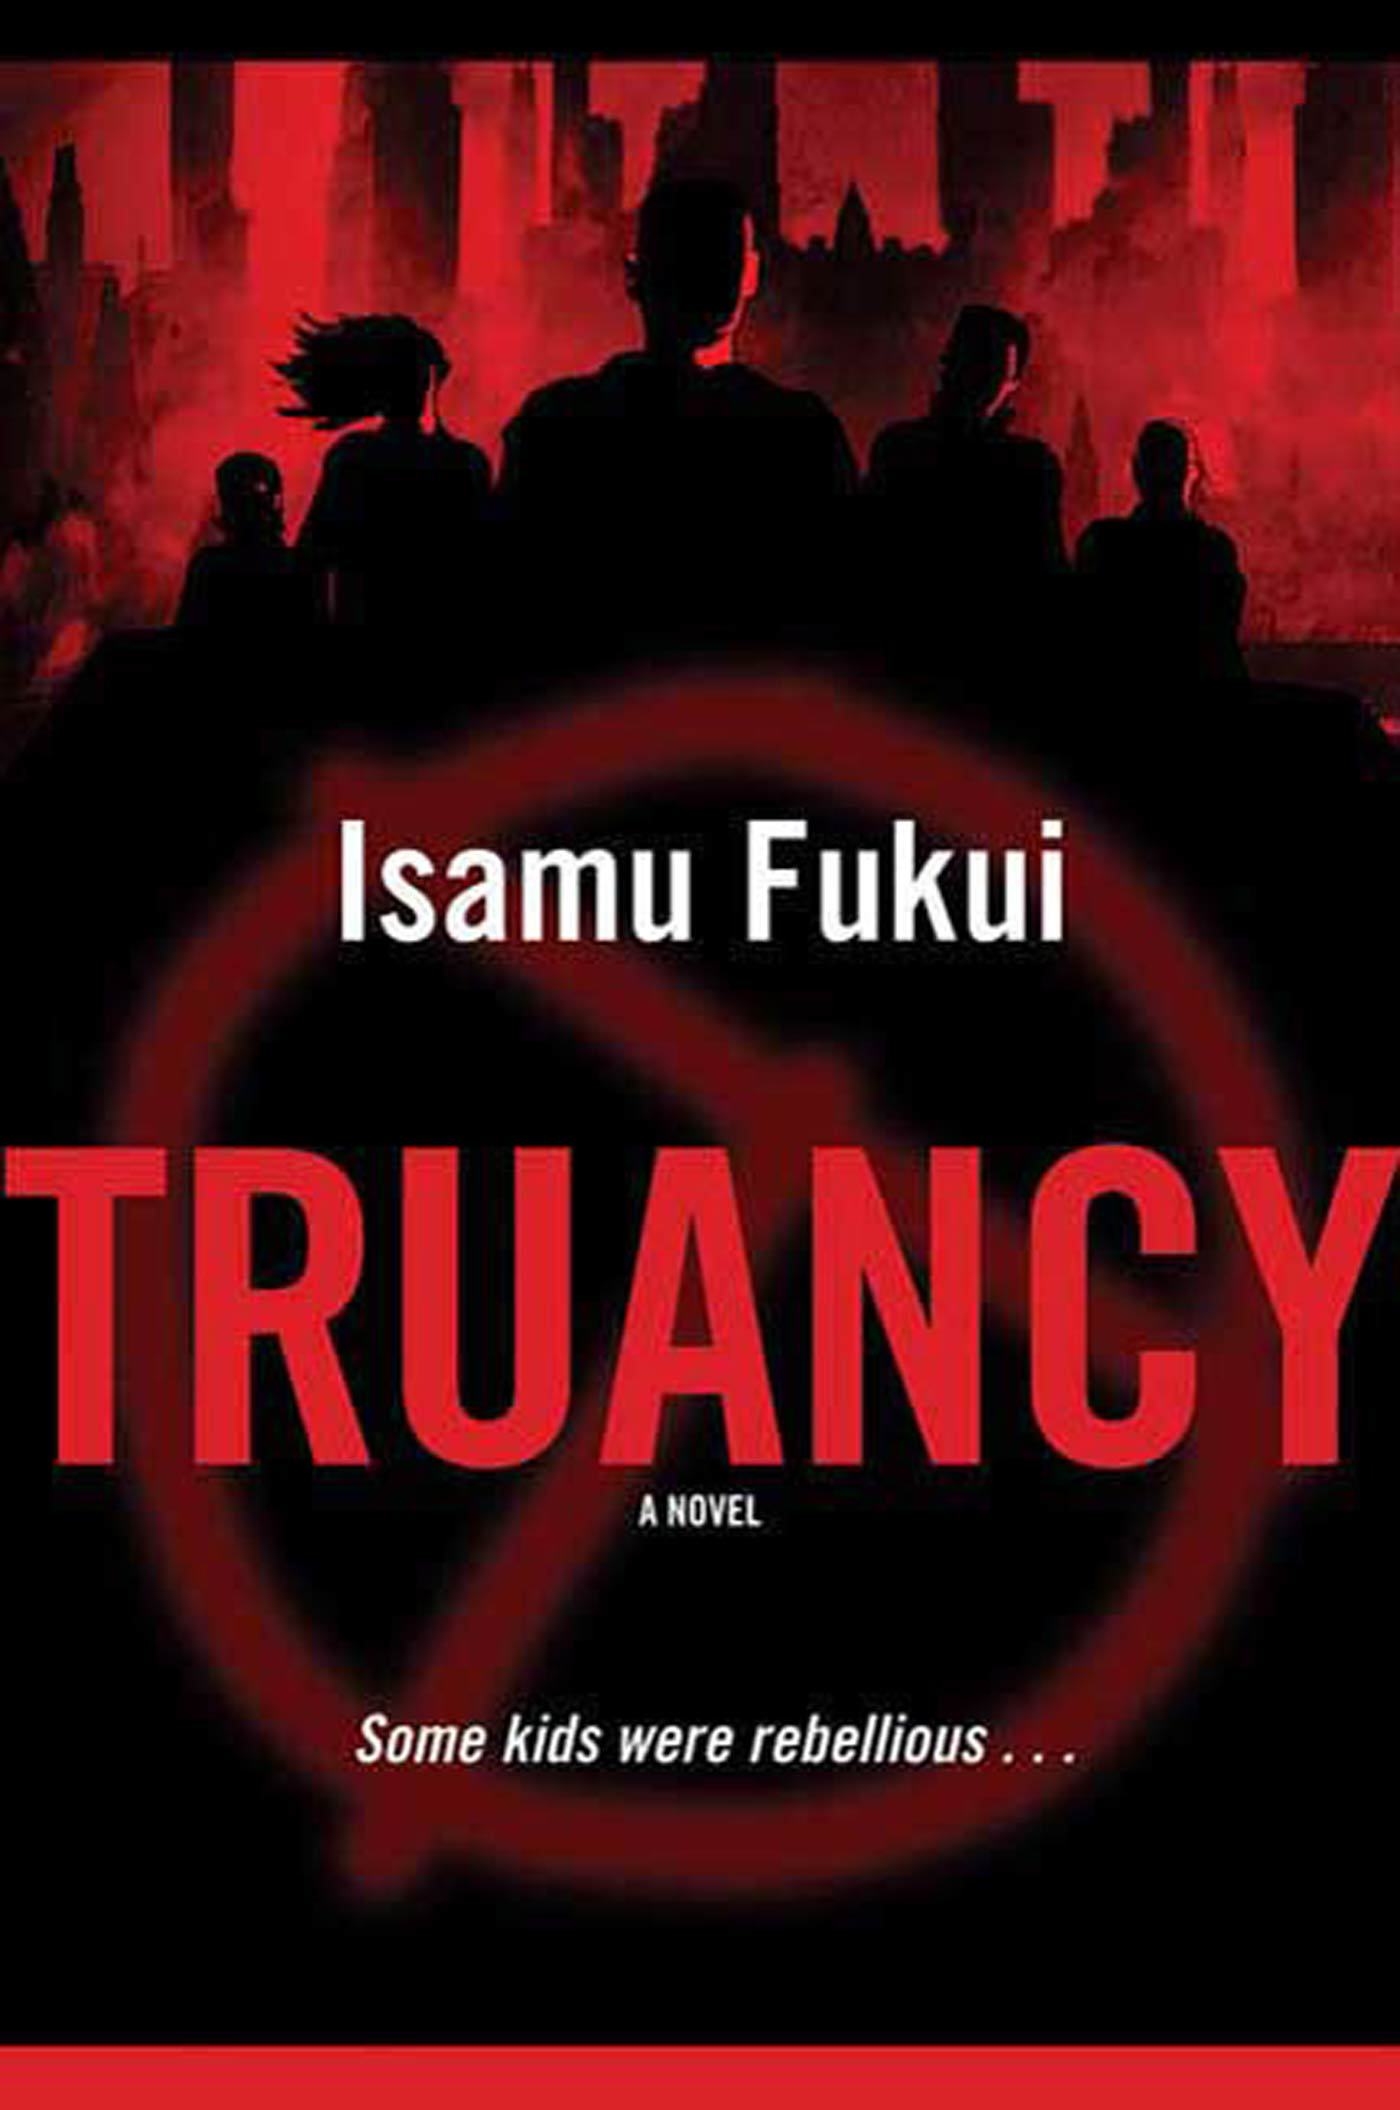 Truancy : A Novel by Isamu Fukui